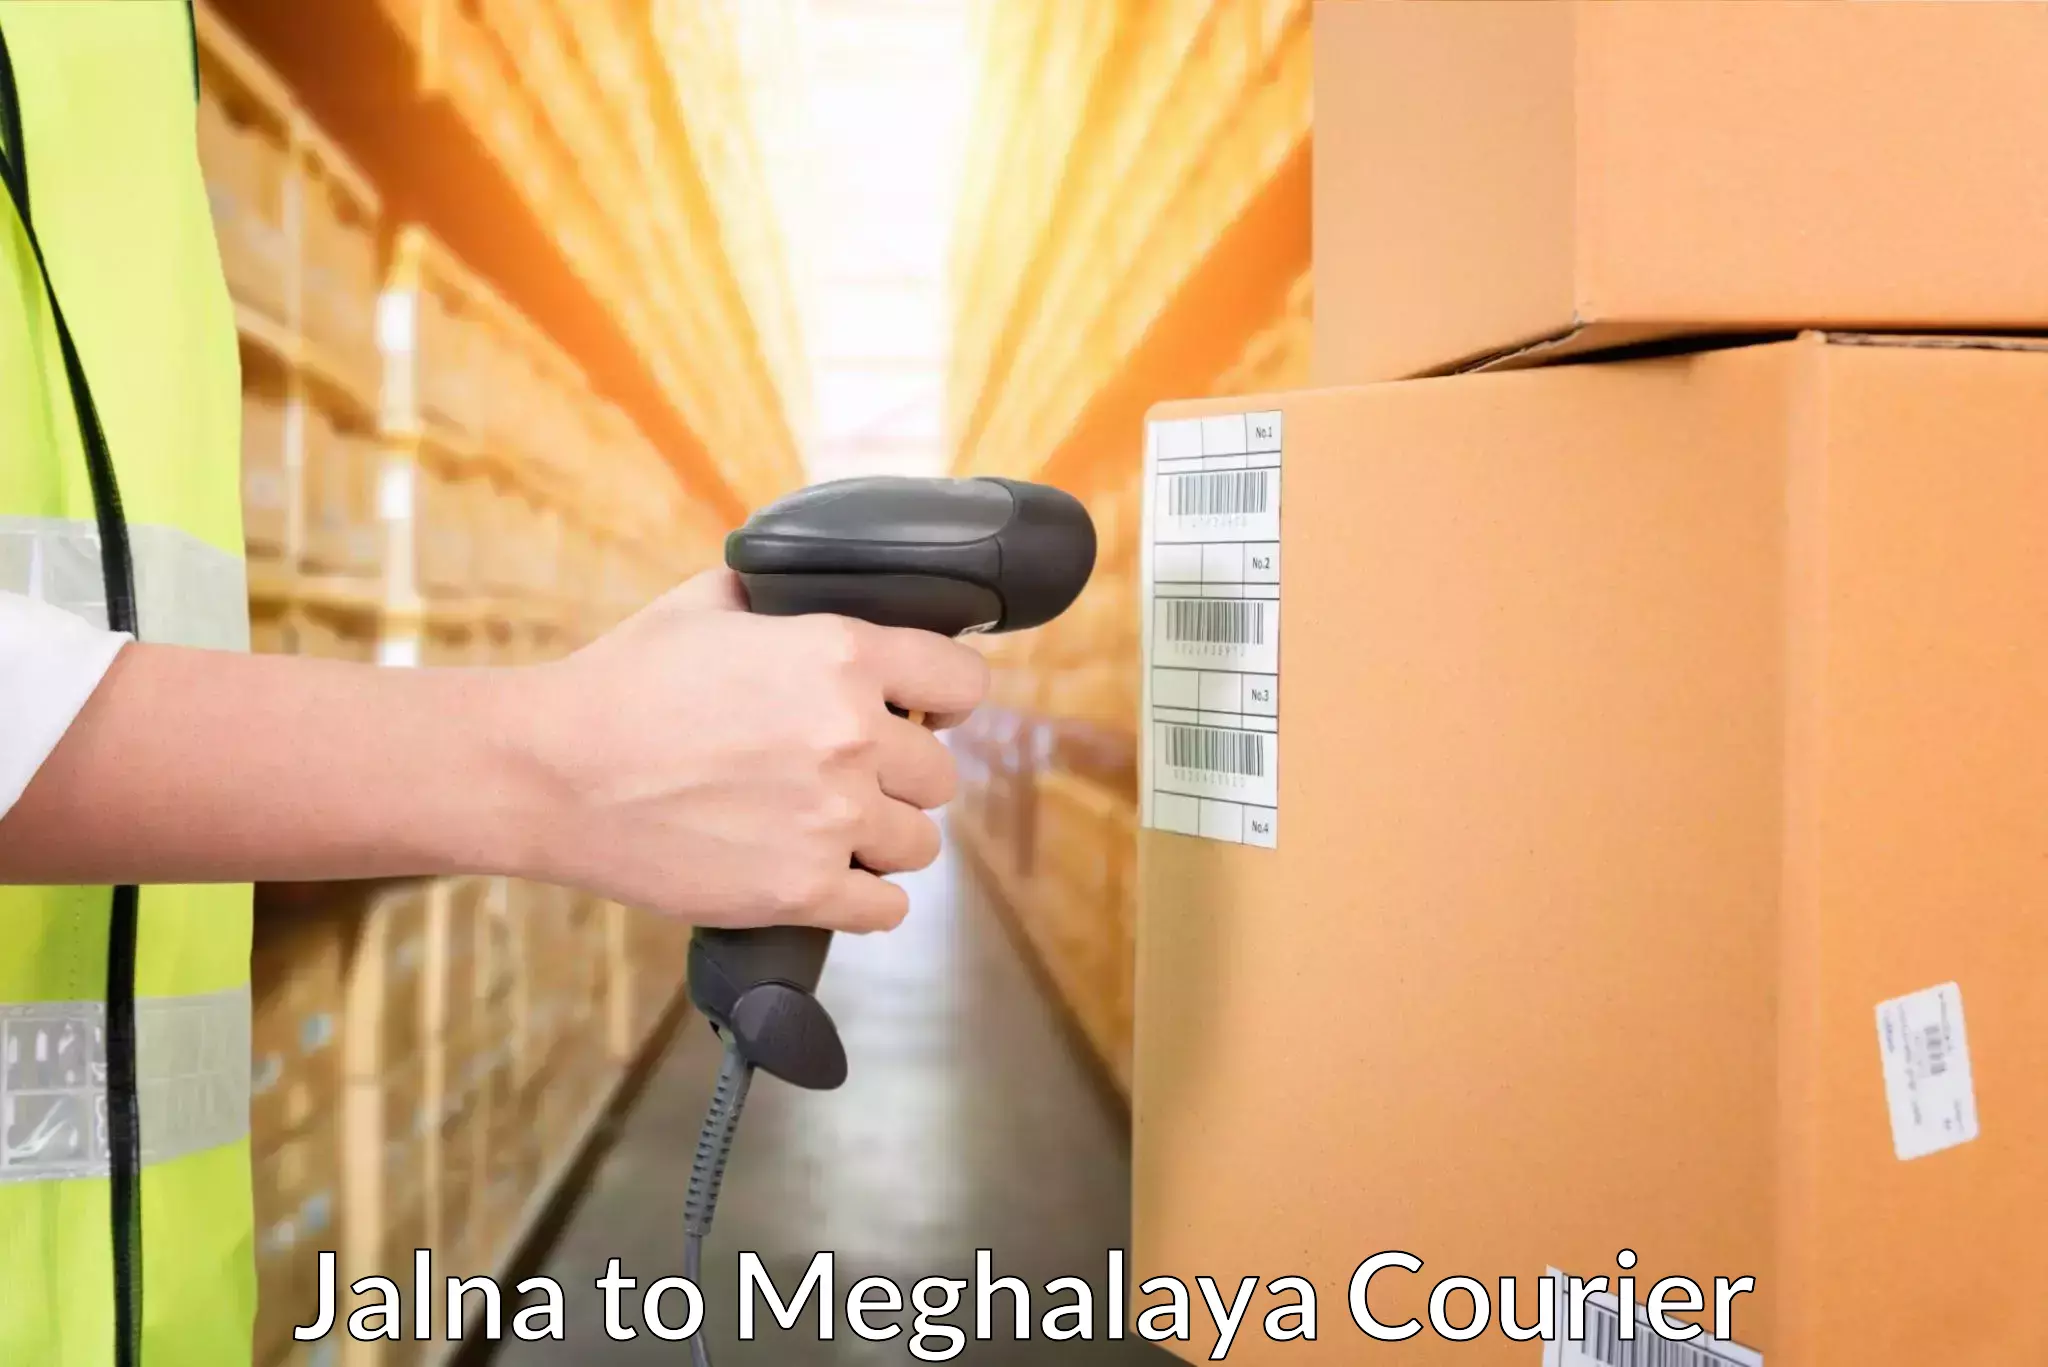 Courier service innovation Jalna to Umsaw